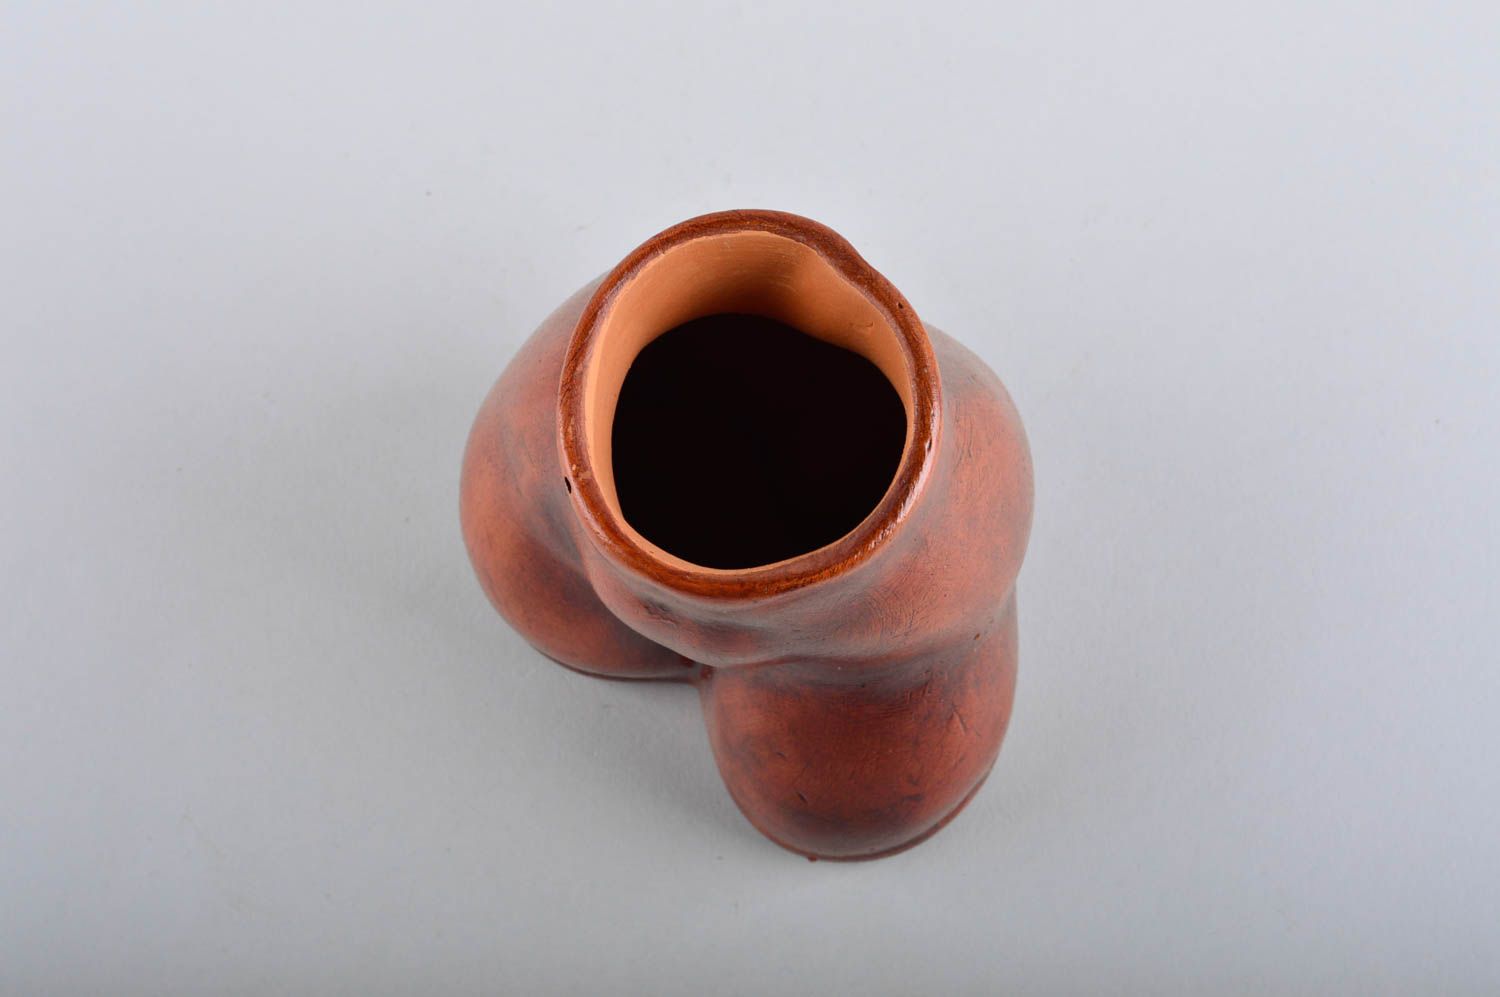 15 oz ceramic brown clay vase jug 4 inches tall 0,81 lb photo 4